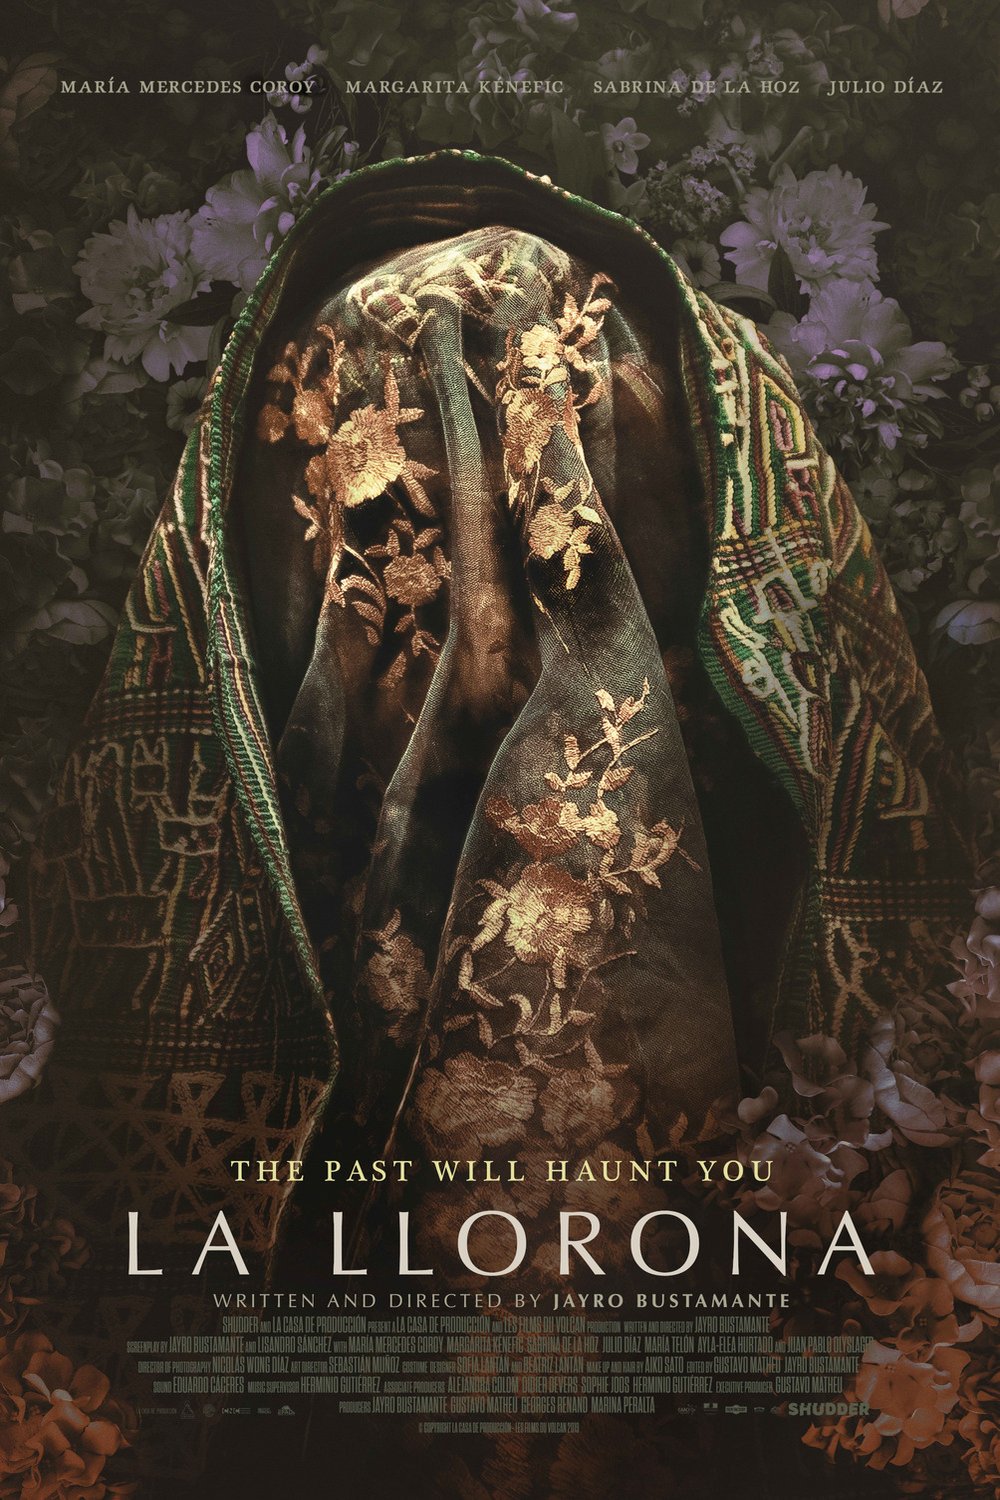 L'affiche originale du film La llorona en espagnol